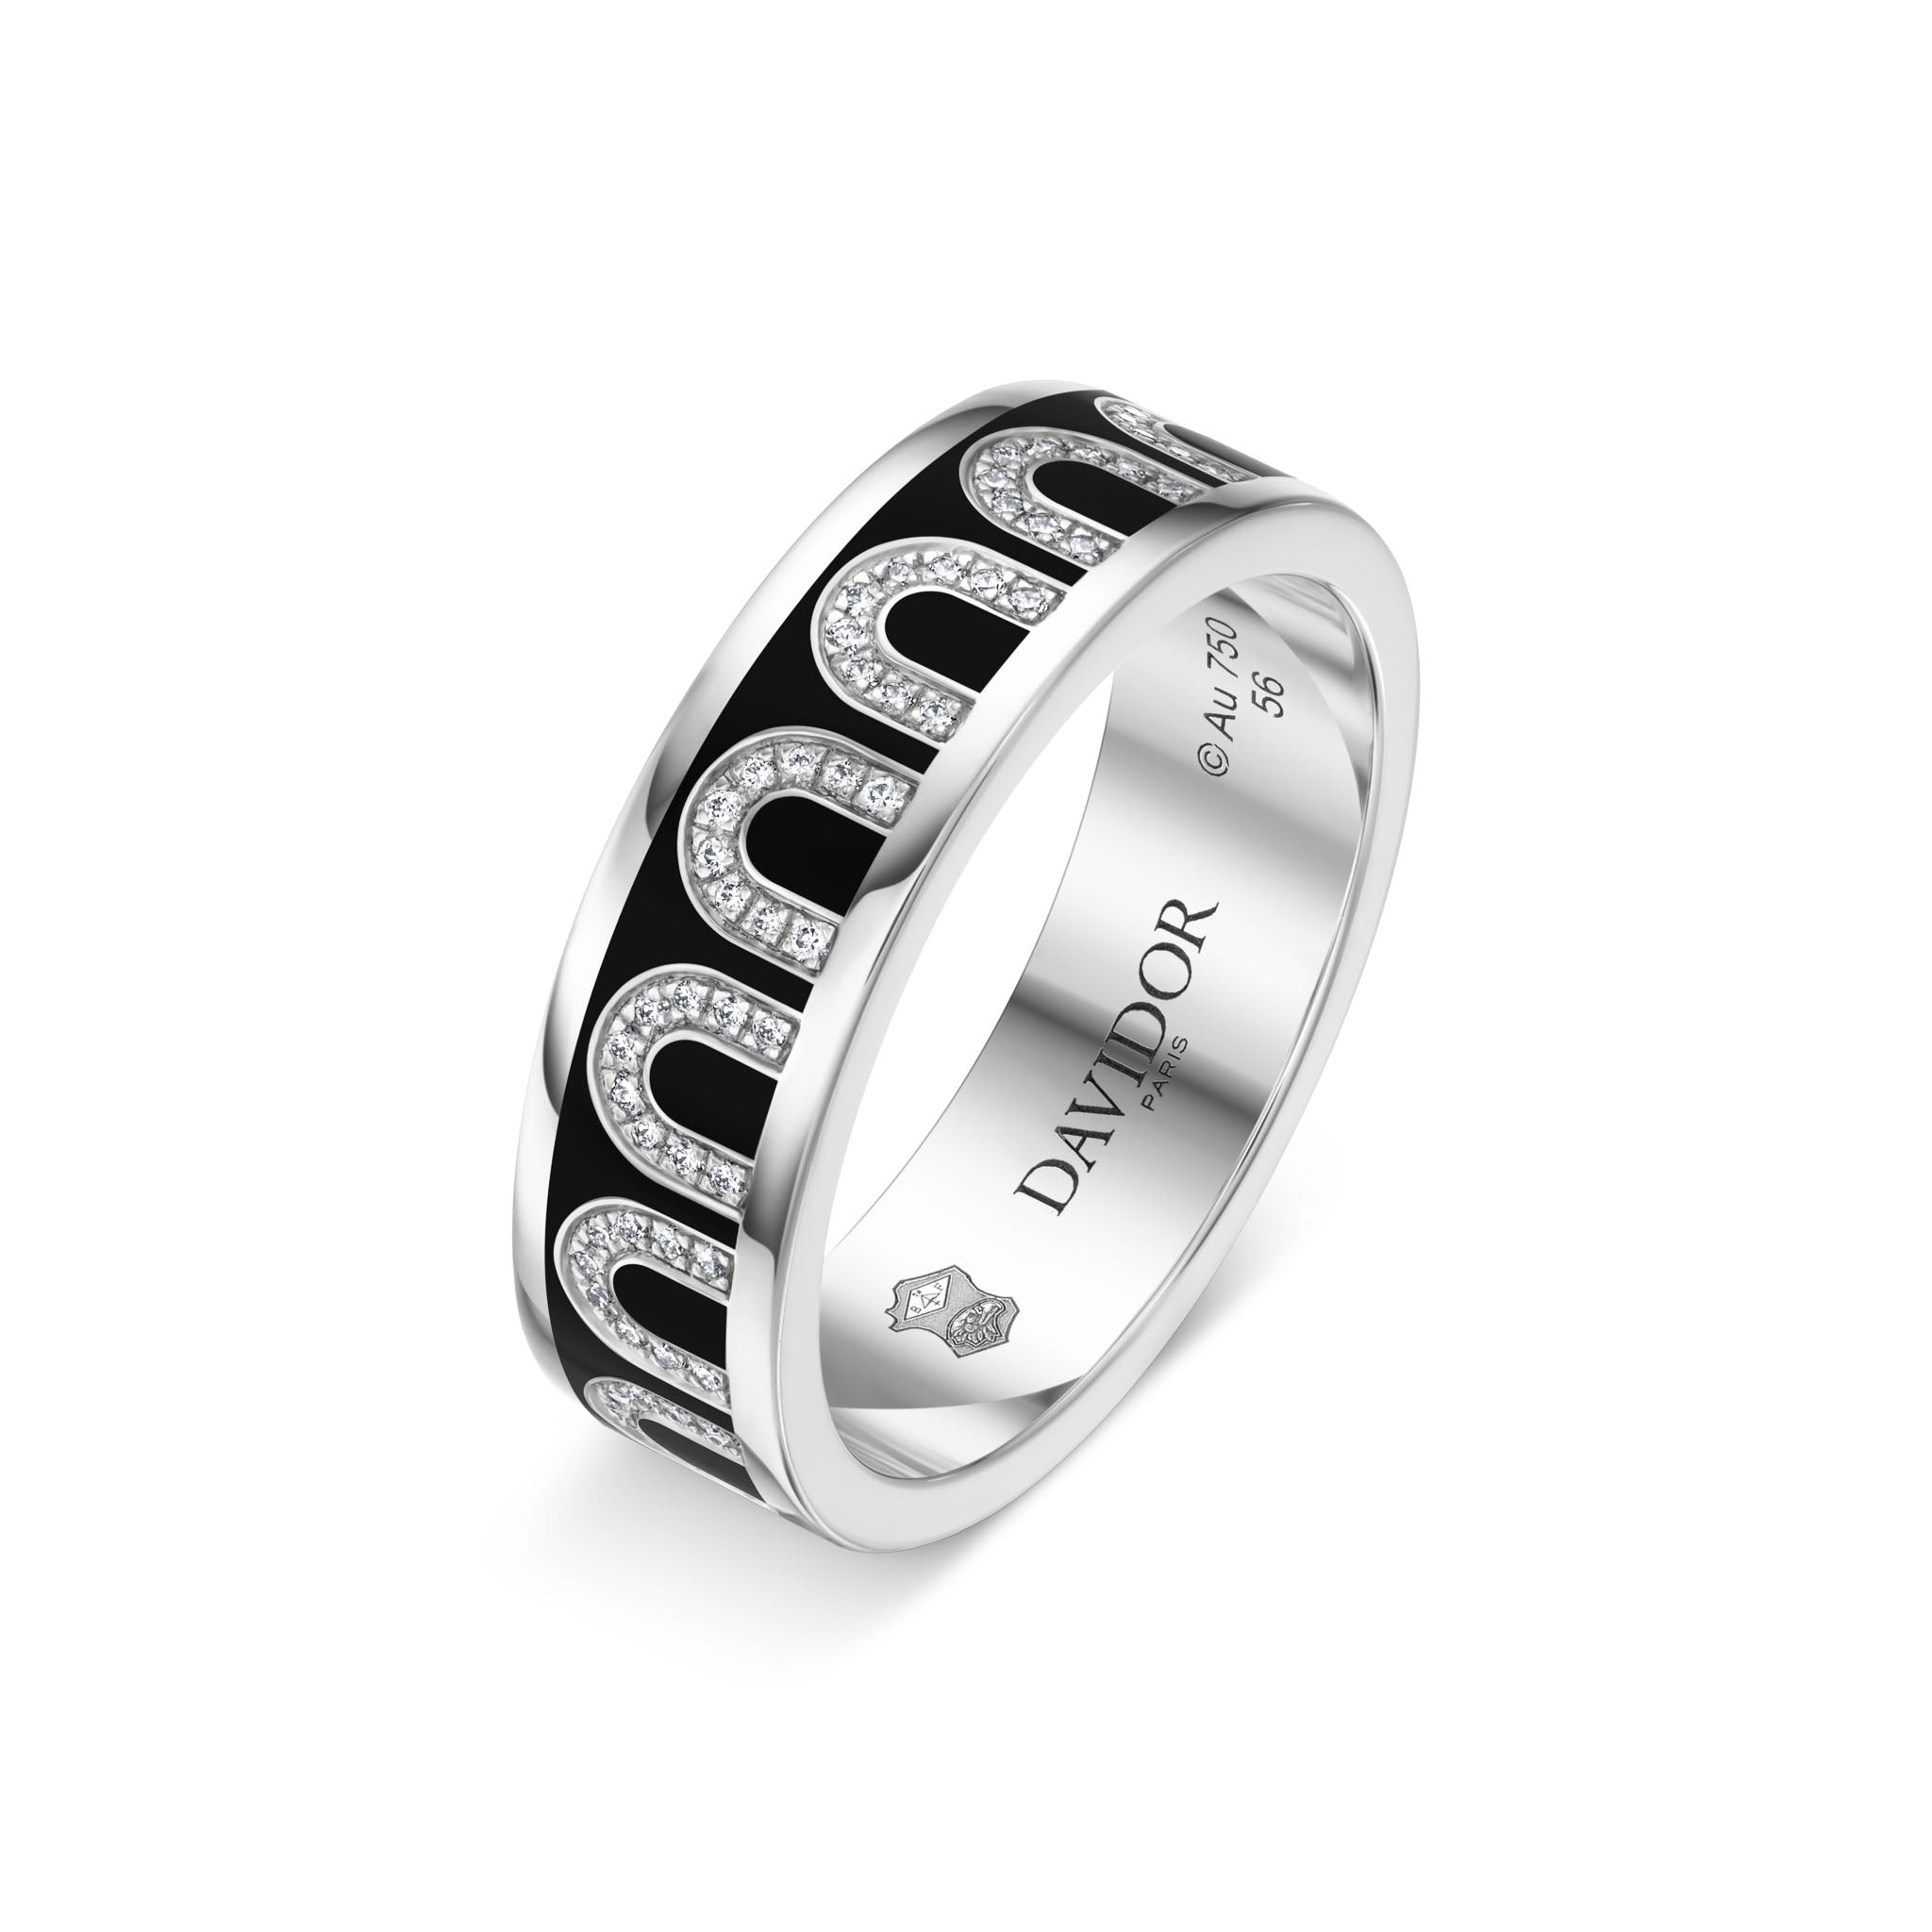 L’Arc de DAVIDOR Ring MM, 18k White Gold with Caviar Lacquered Ceramic and Arcade Diamonds